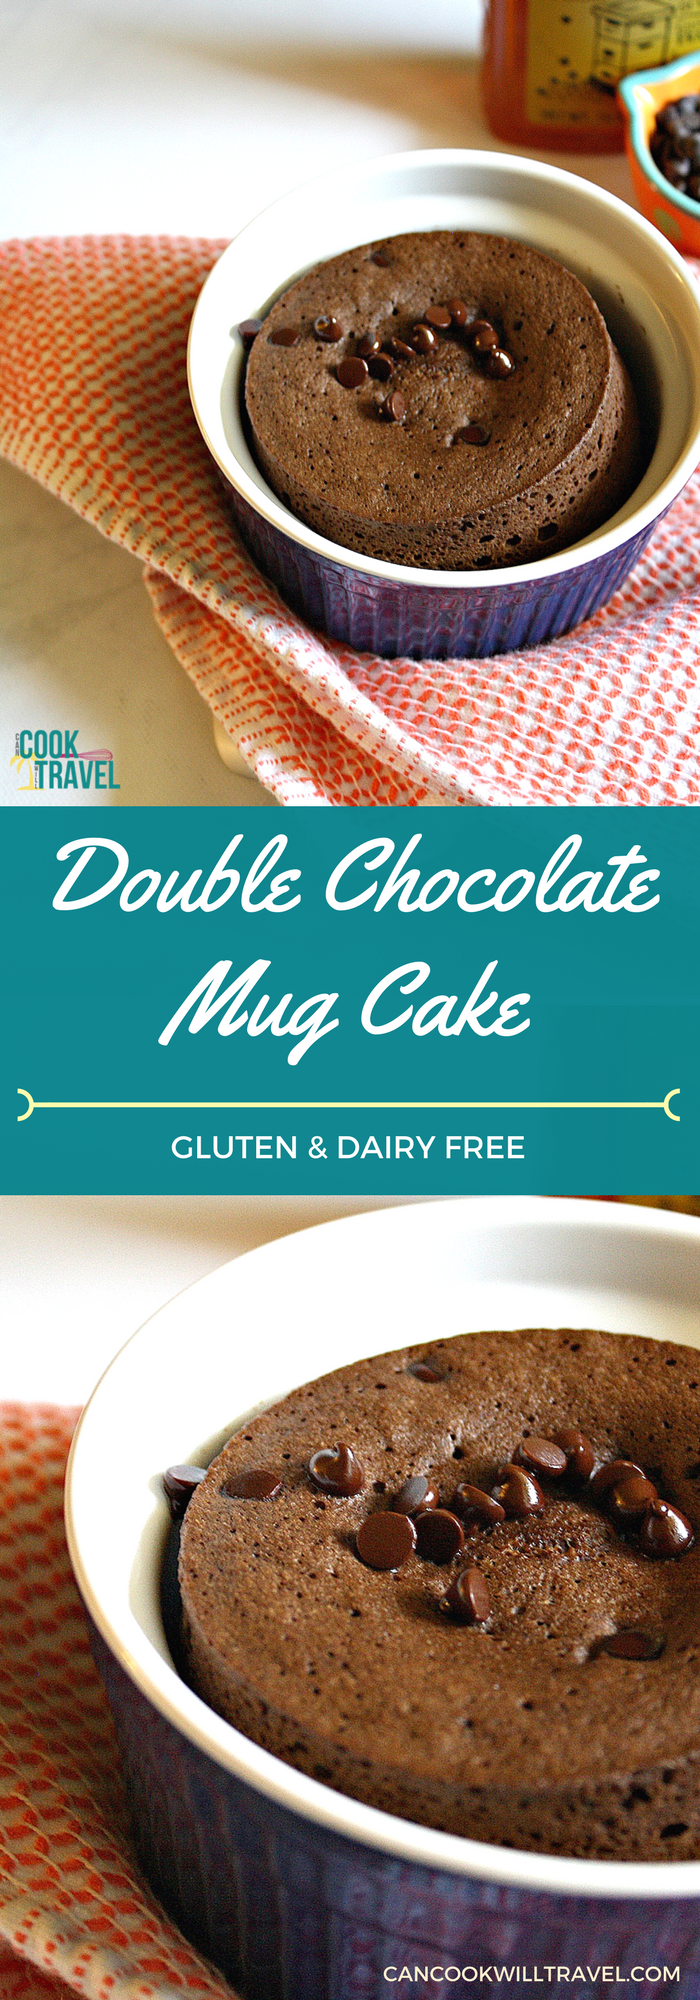 Double Chocolate Mug Cake_Collage1